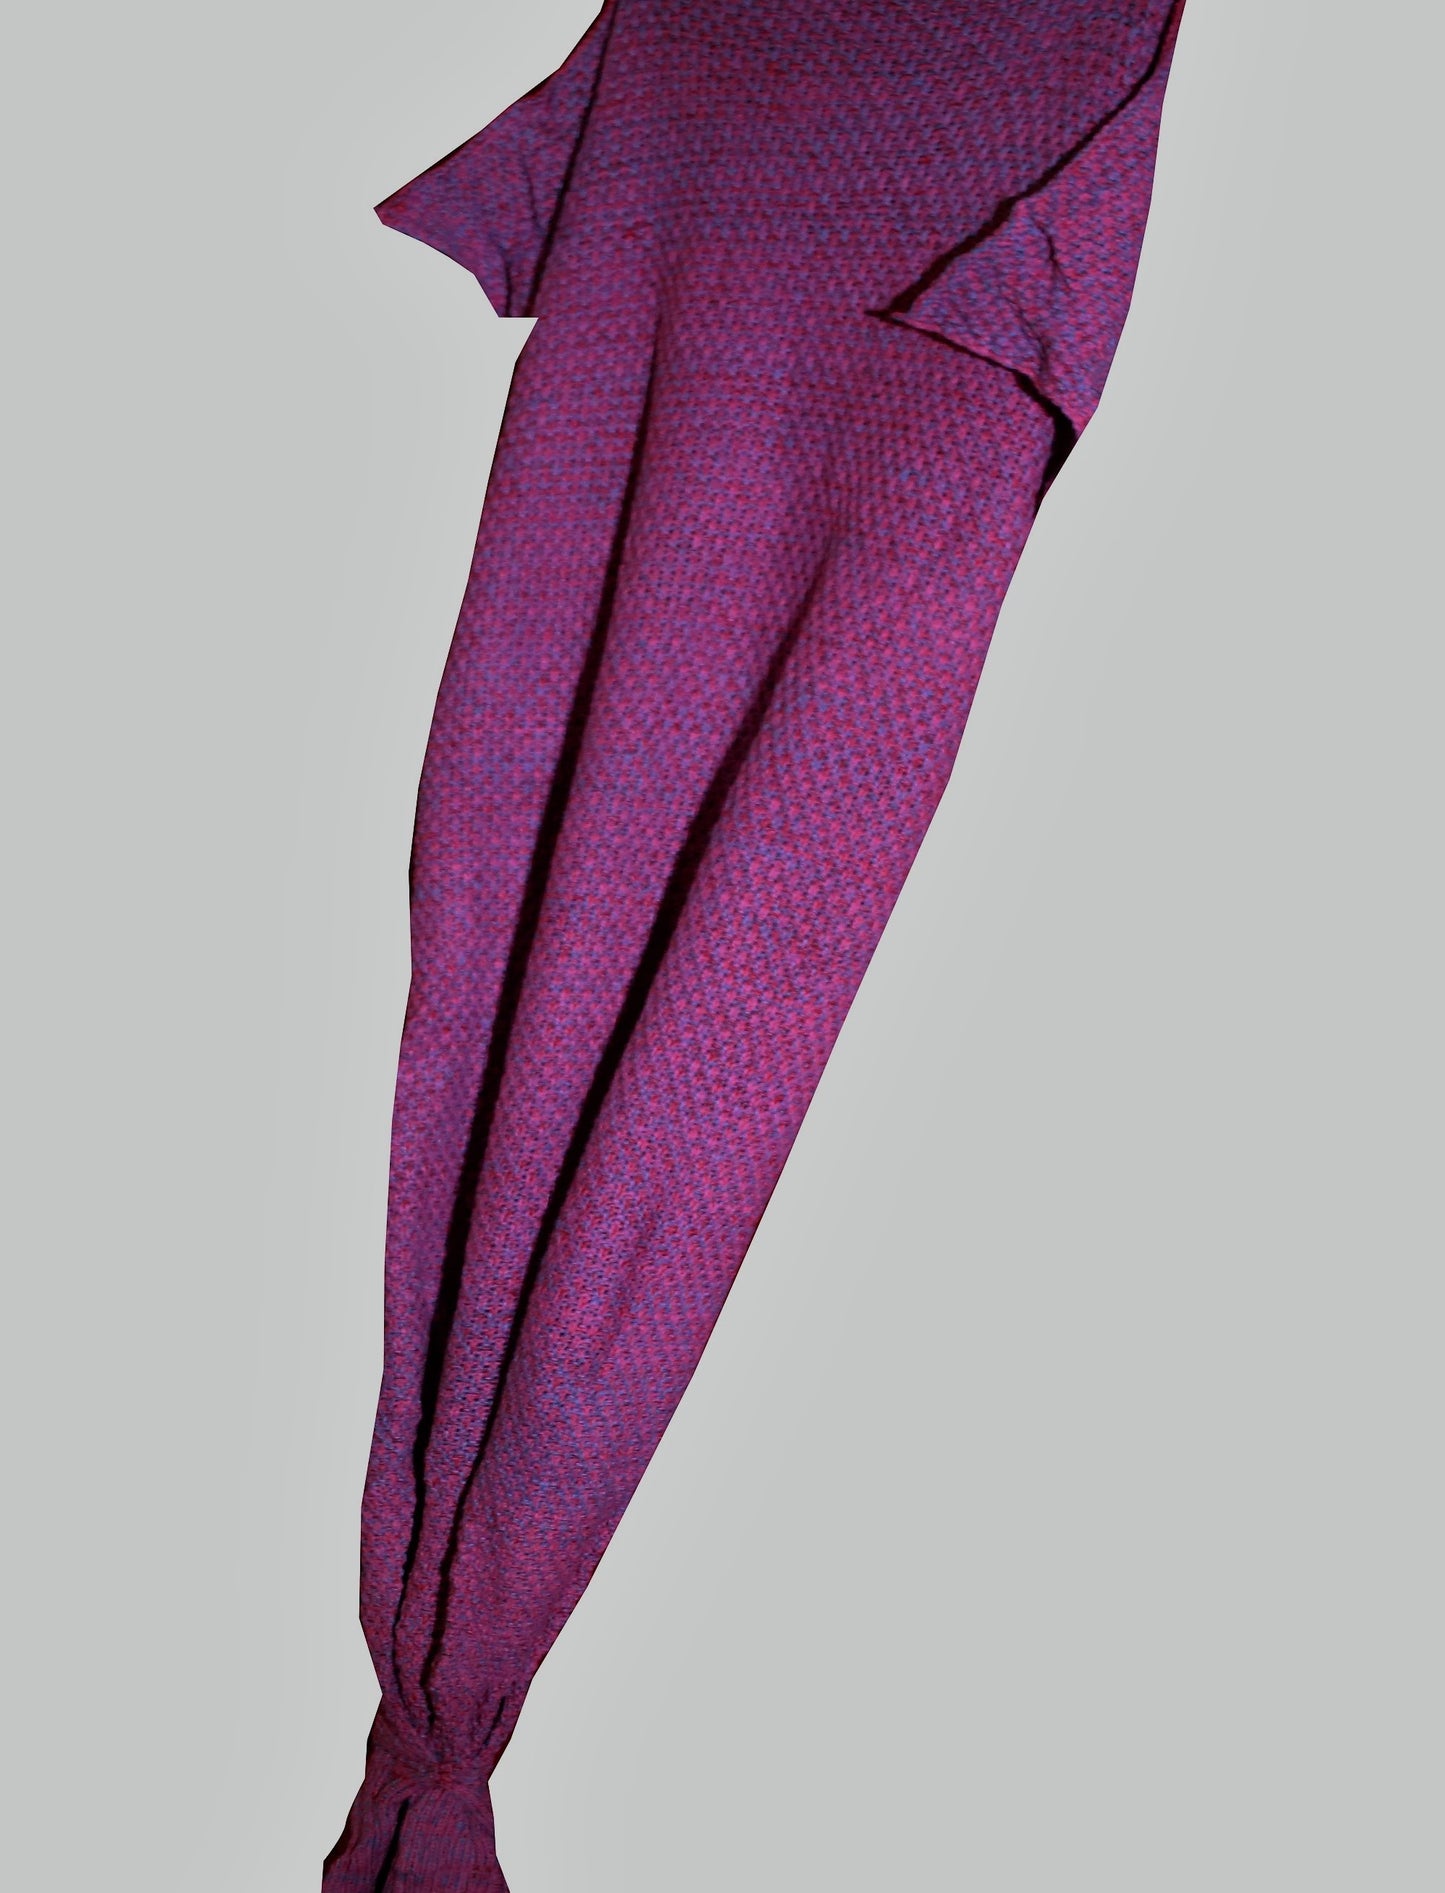 Crochet Adult/Teens Mermaid Blanket with Tail - Fuscia-Purple